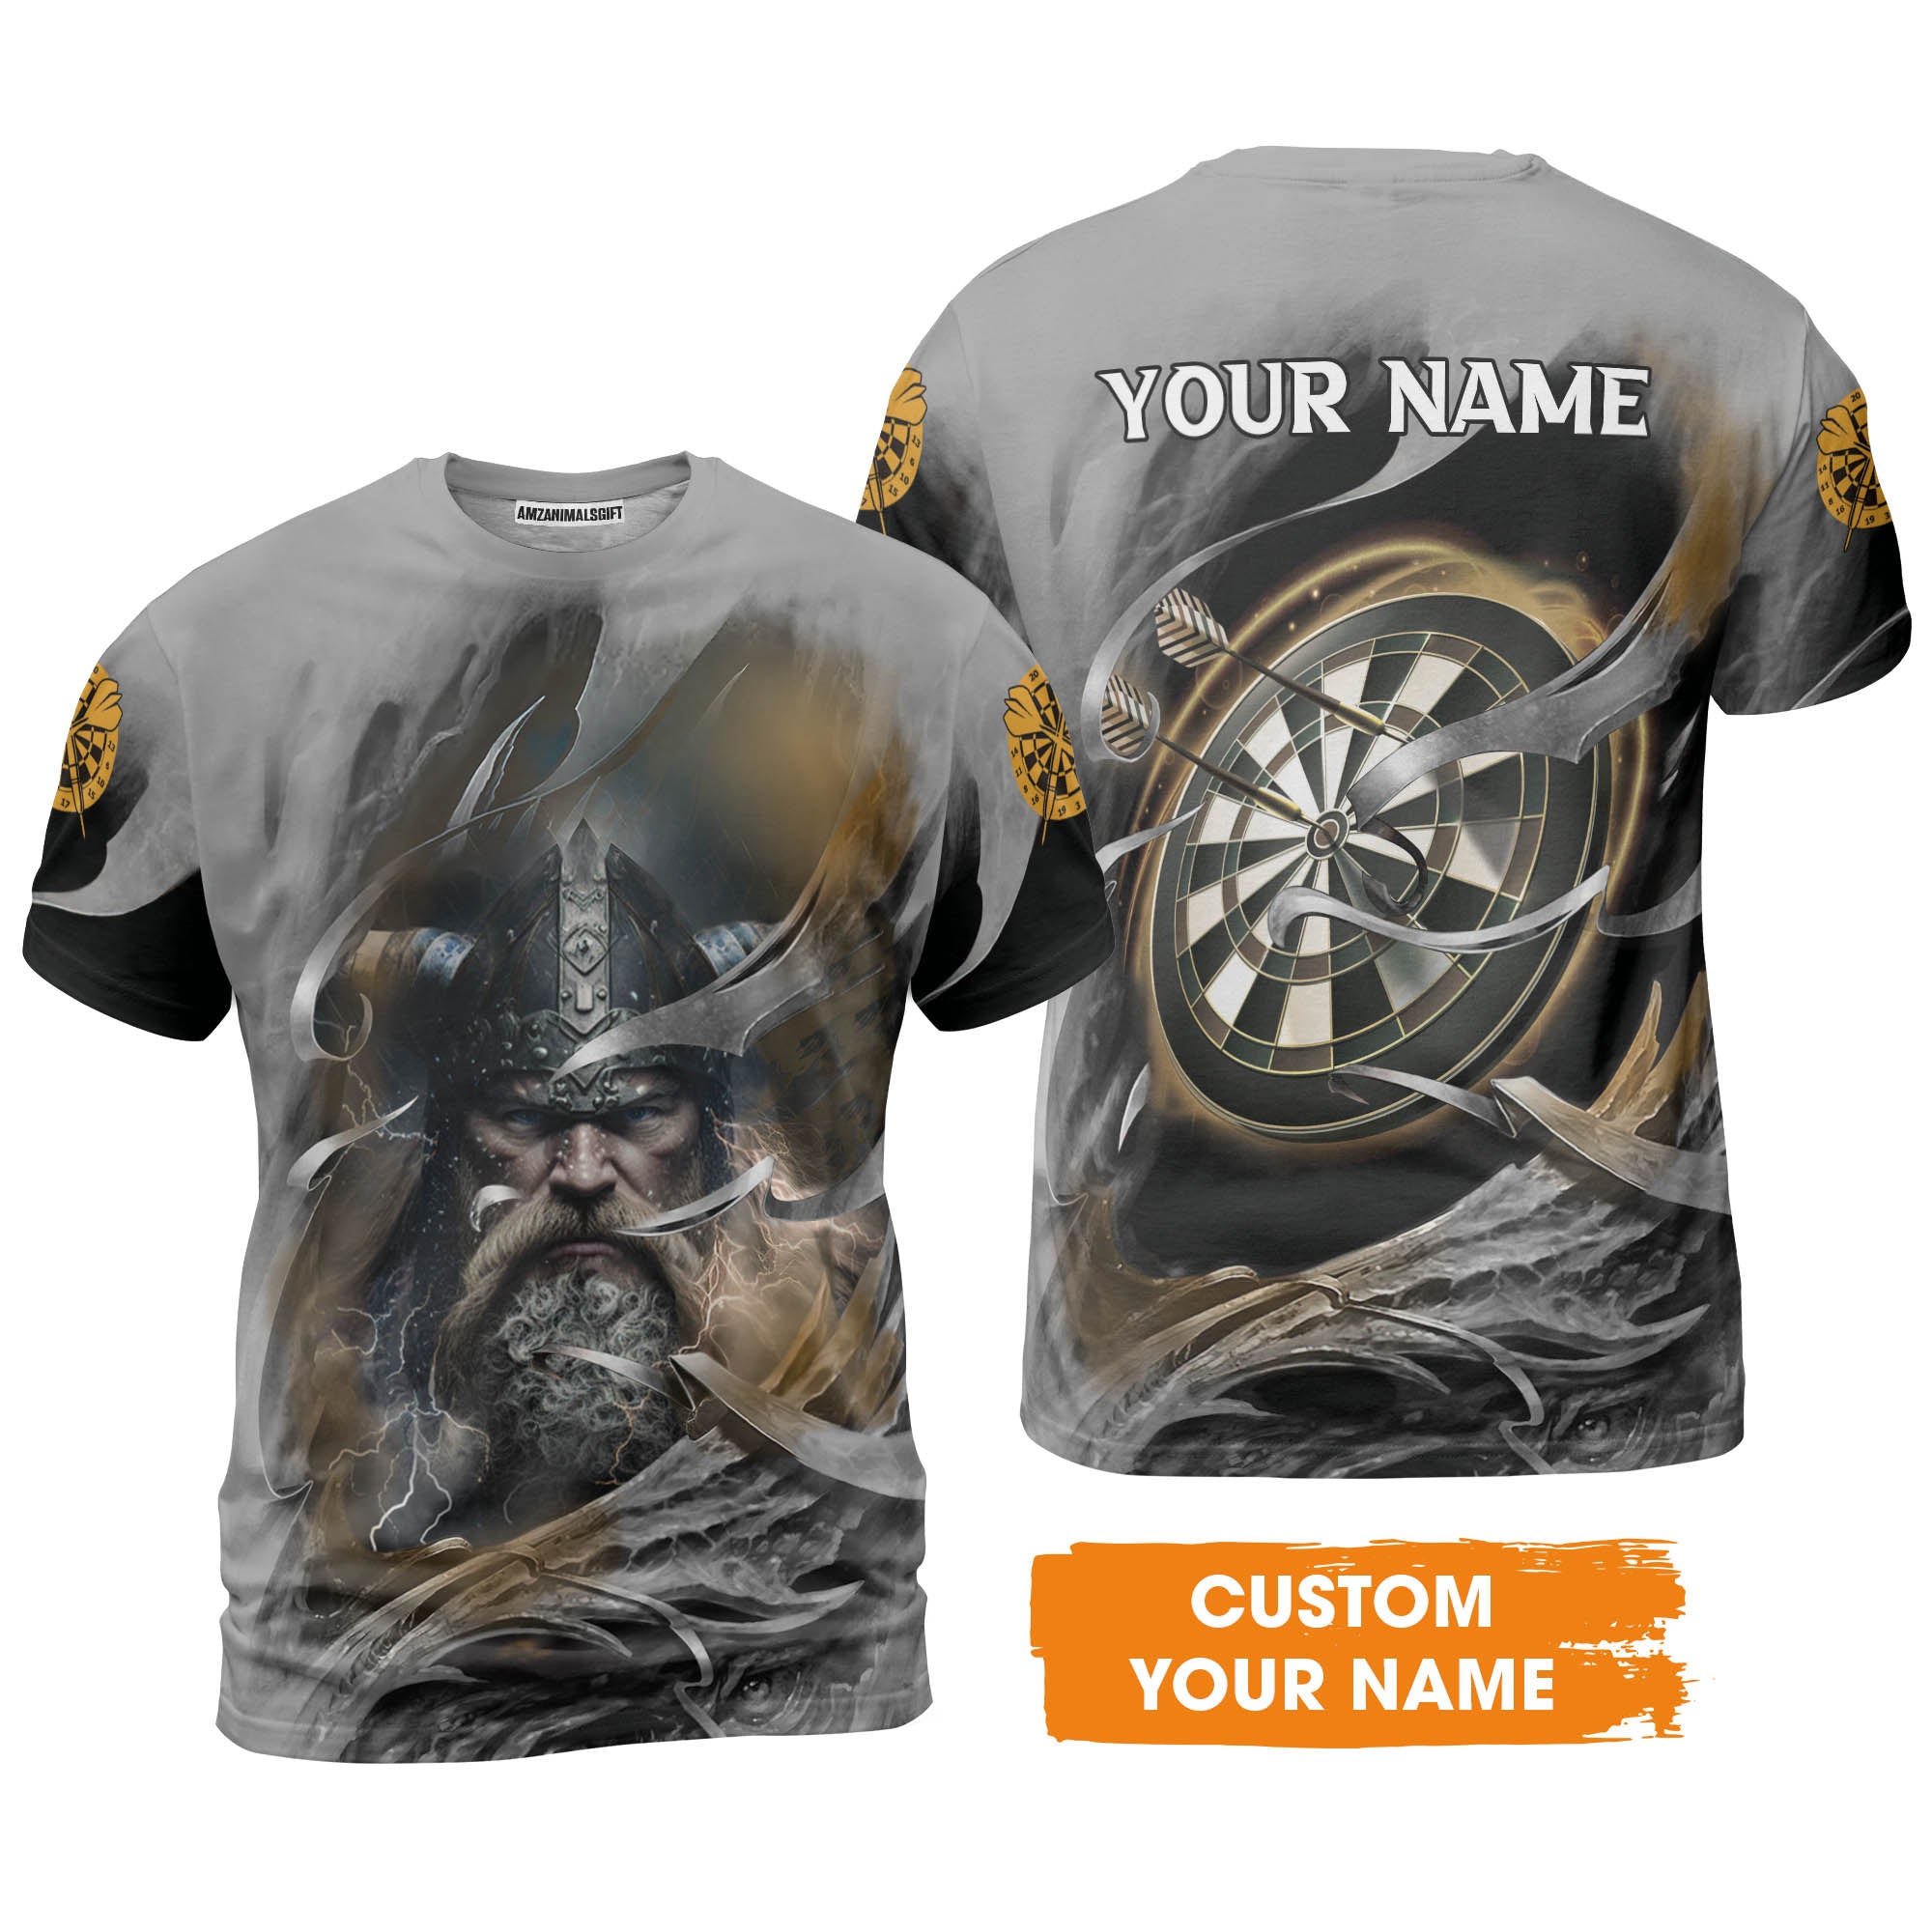 Customized Name Darts T-Shirt, Bullseye Dartboard Viking And Darts T-Shirt - Gift For Darts Players, Darts Lovers